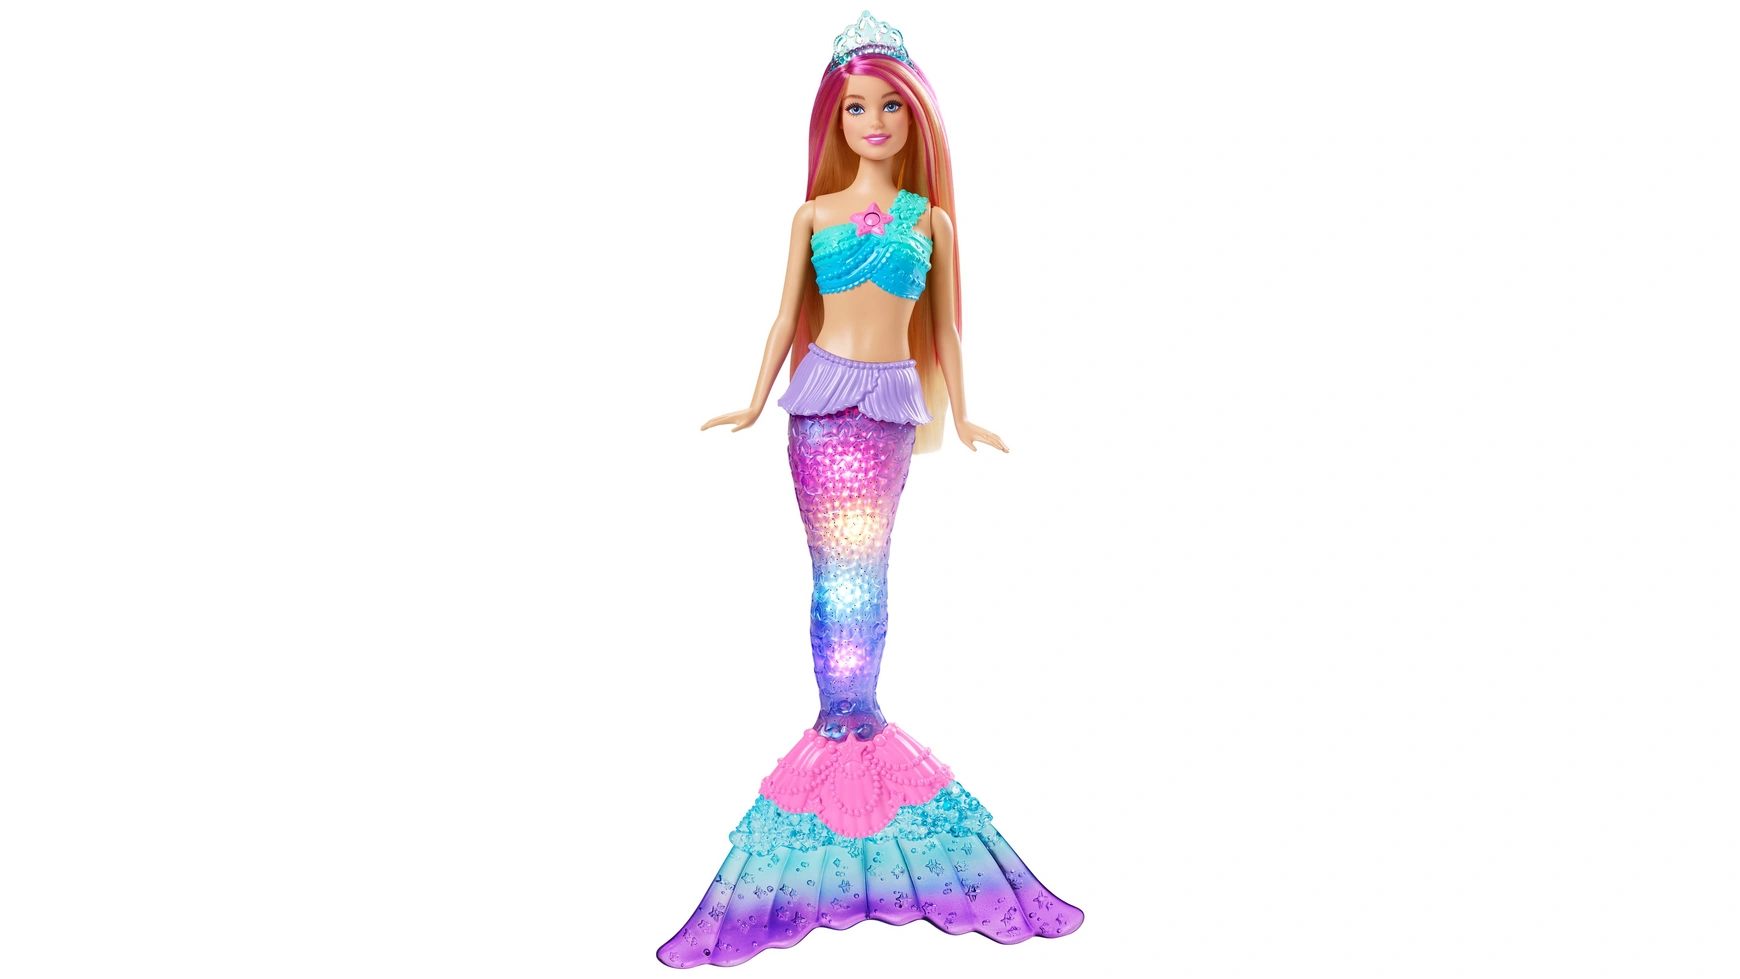 Кукла Barbie Волшебная светящаяся русалка (загорается), Barbie Dreamtopia